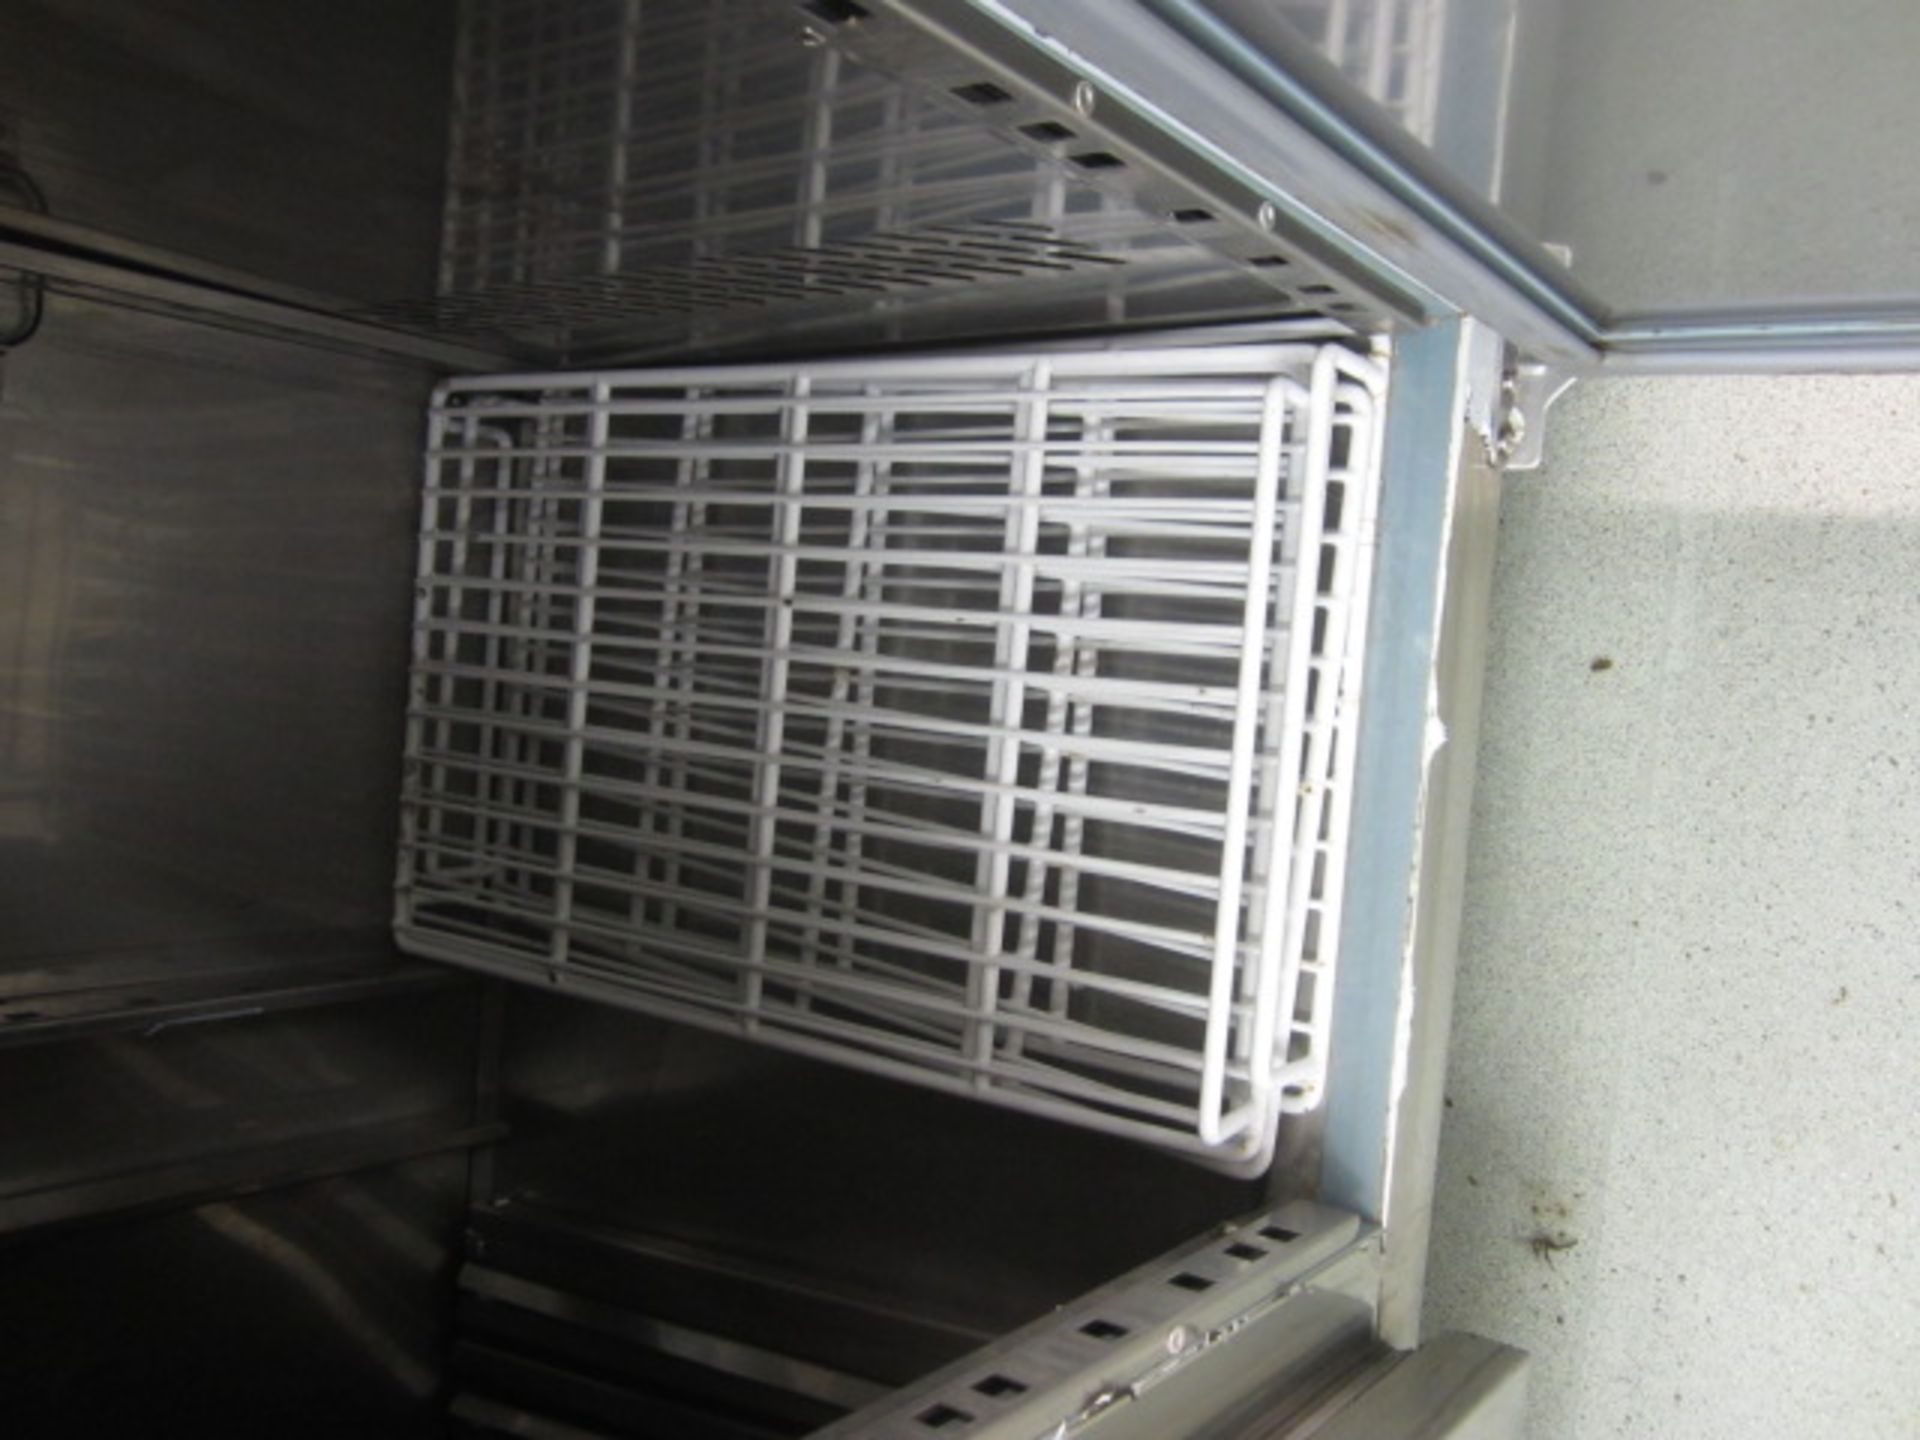 Unbadged stainless steel 4 door refrigerator with preparation worktop, 2230mm x 700mm x H850mm - Image 5 of 5